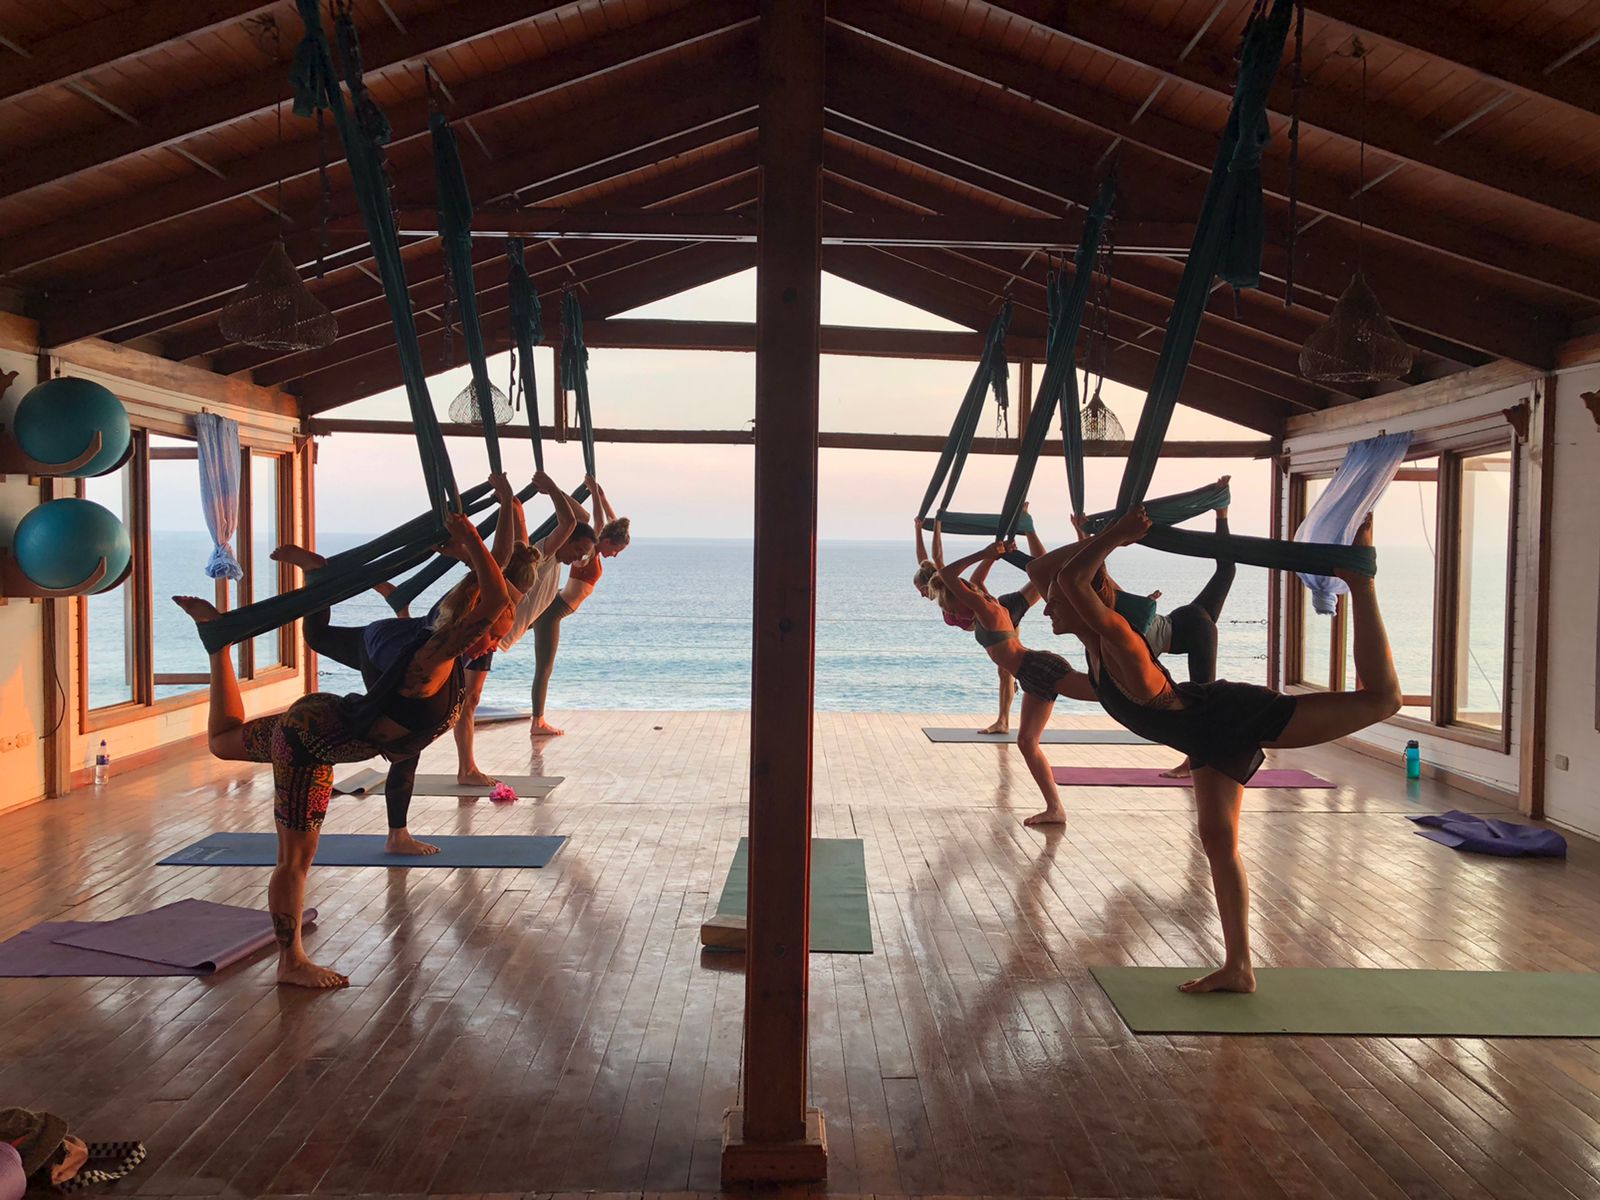 Circasana Aerial Yoga Retreat -Circus with purpose